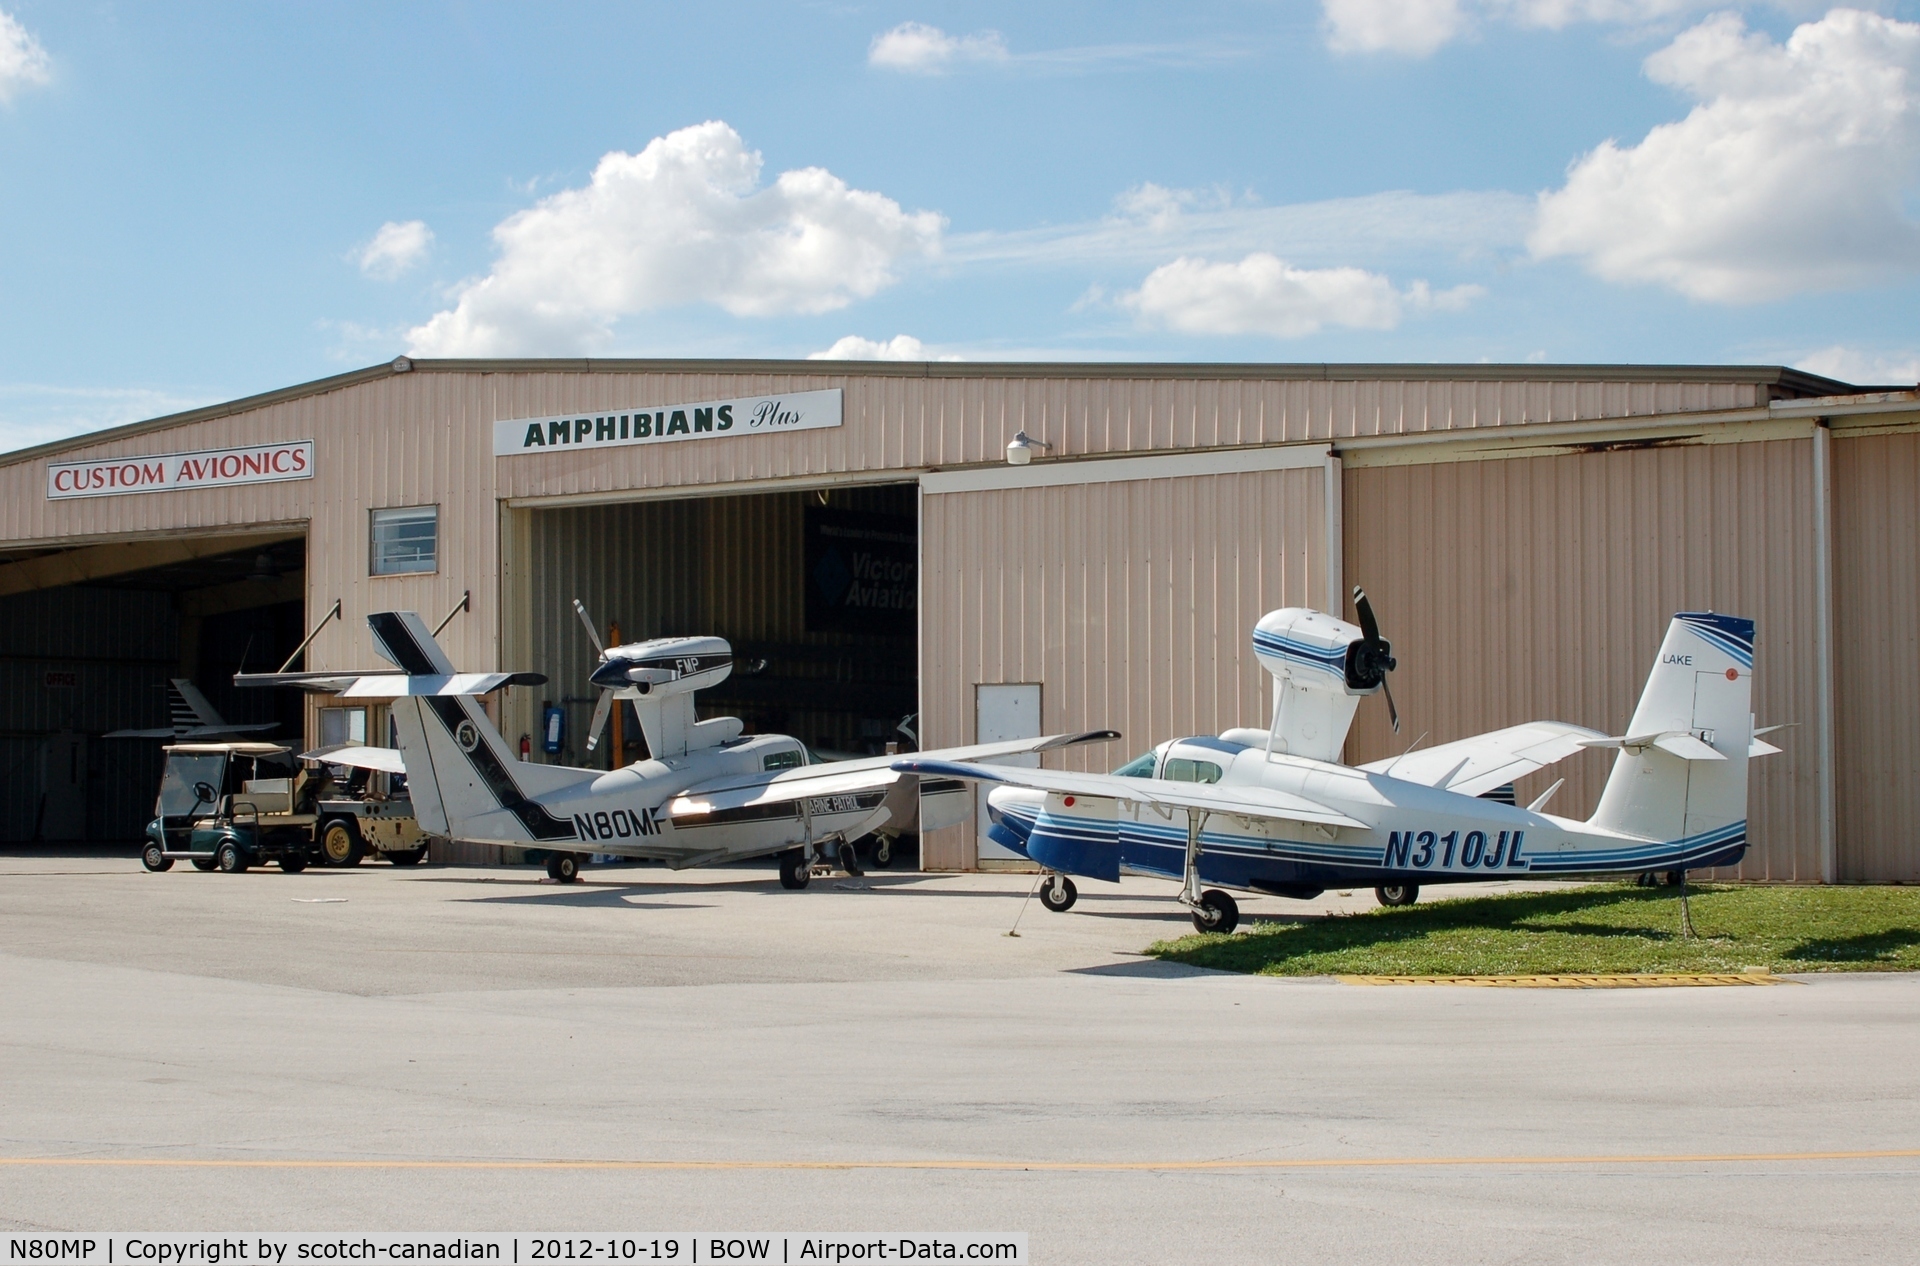 N80MP, 1984 Aerofab Inc LAKE LA-4-250 C/N 17, Florida Marine Patrol 1984 Aerofab Inc LAKE LA-4-250 N80MP at Bartow Municipal Airport, Bartow, FL